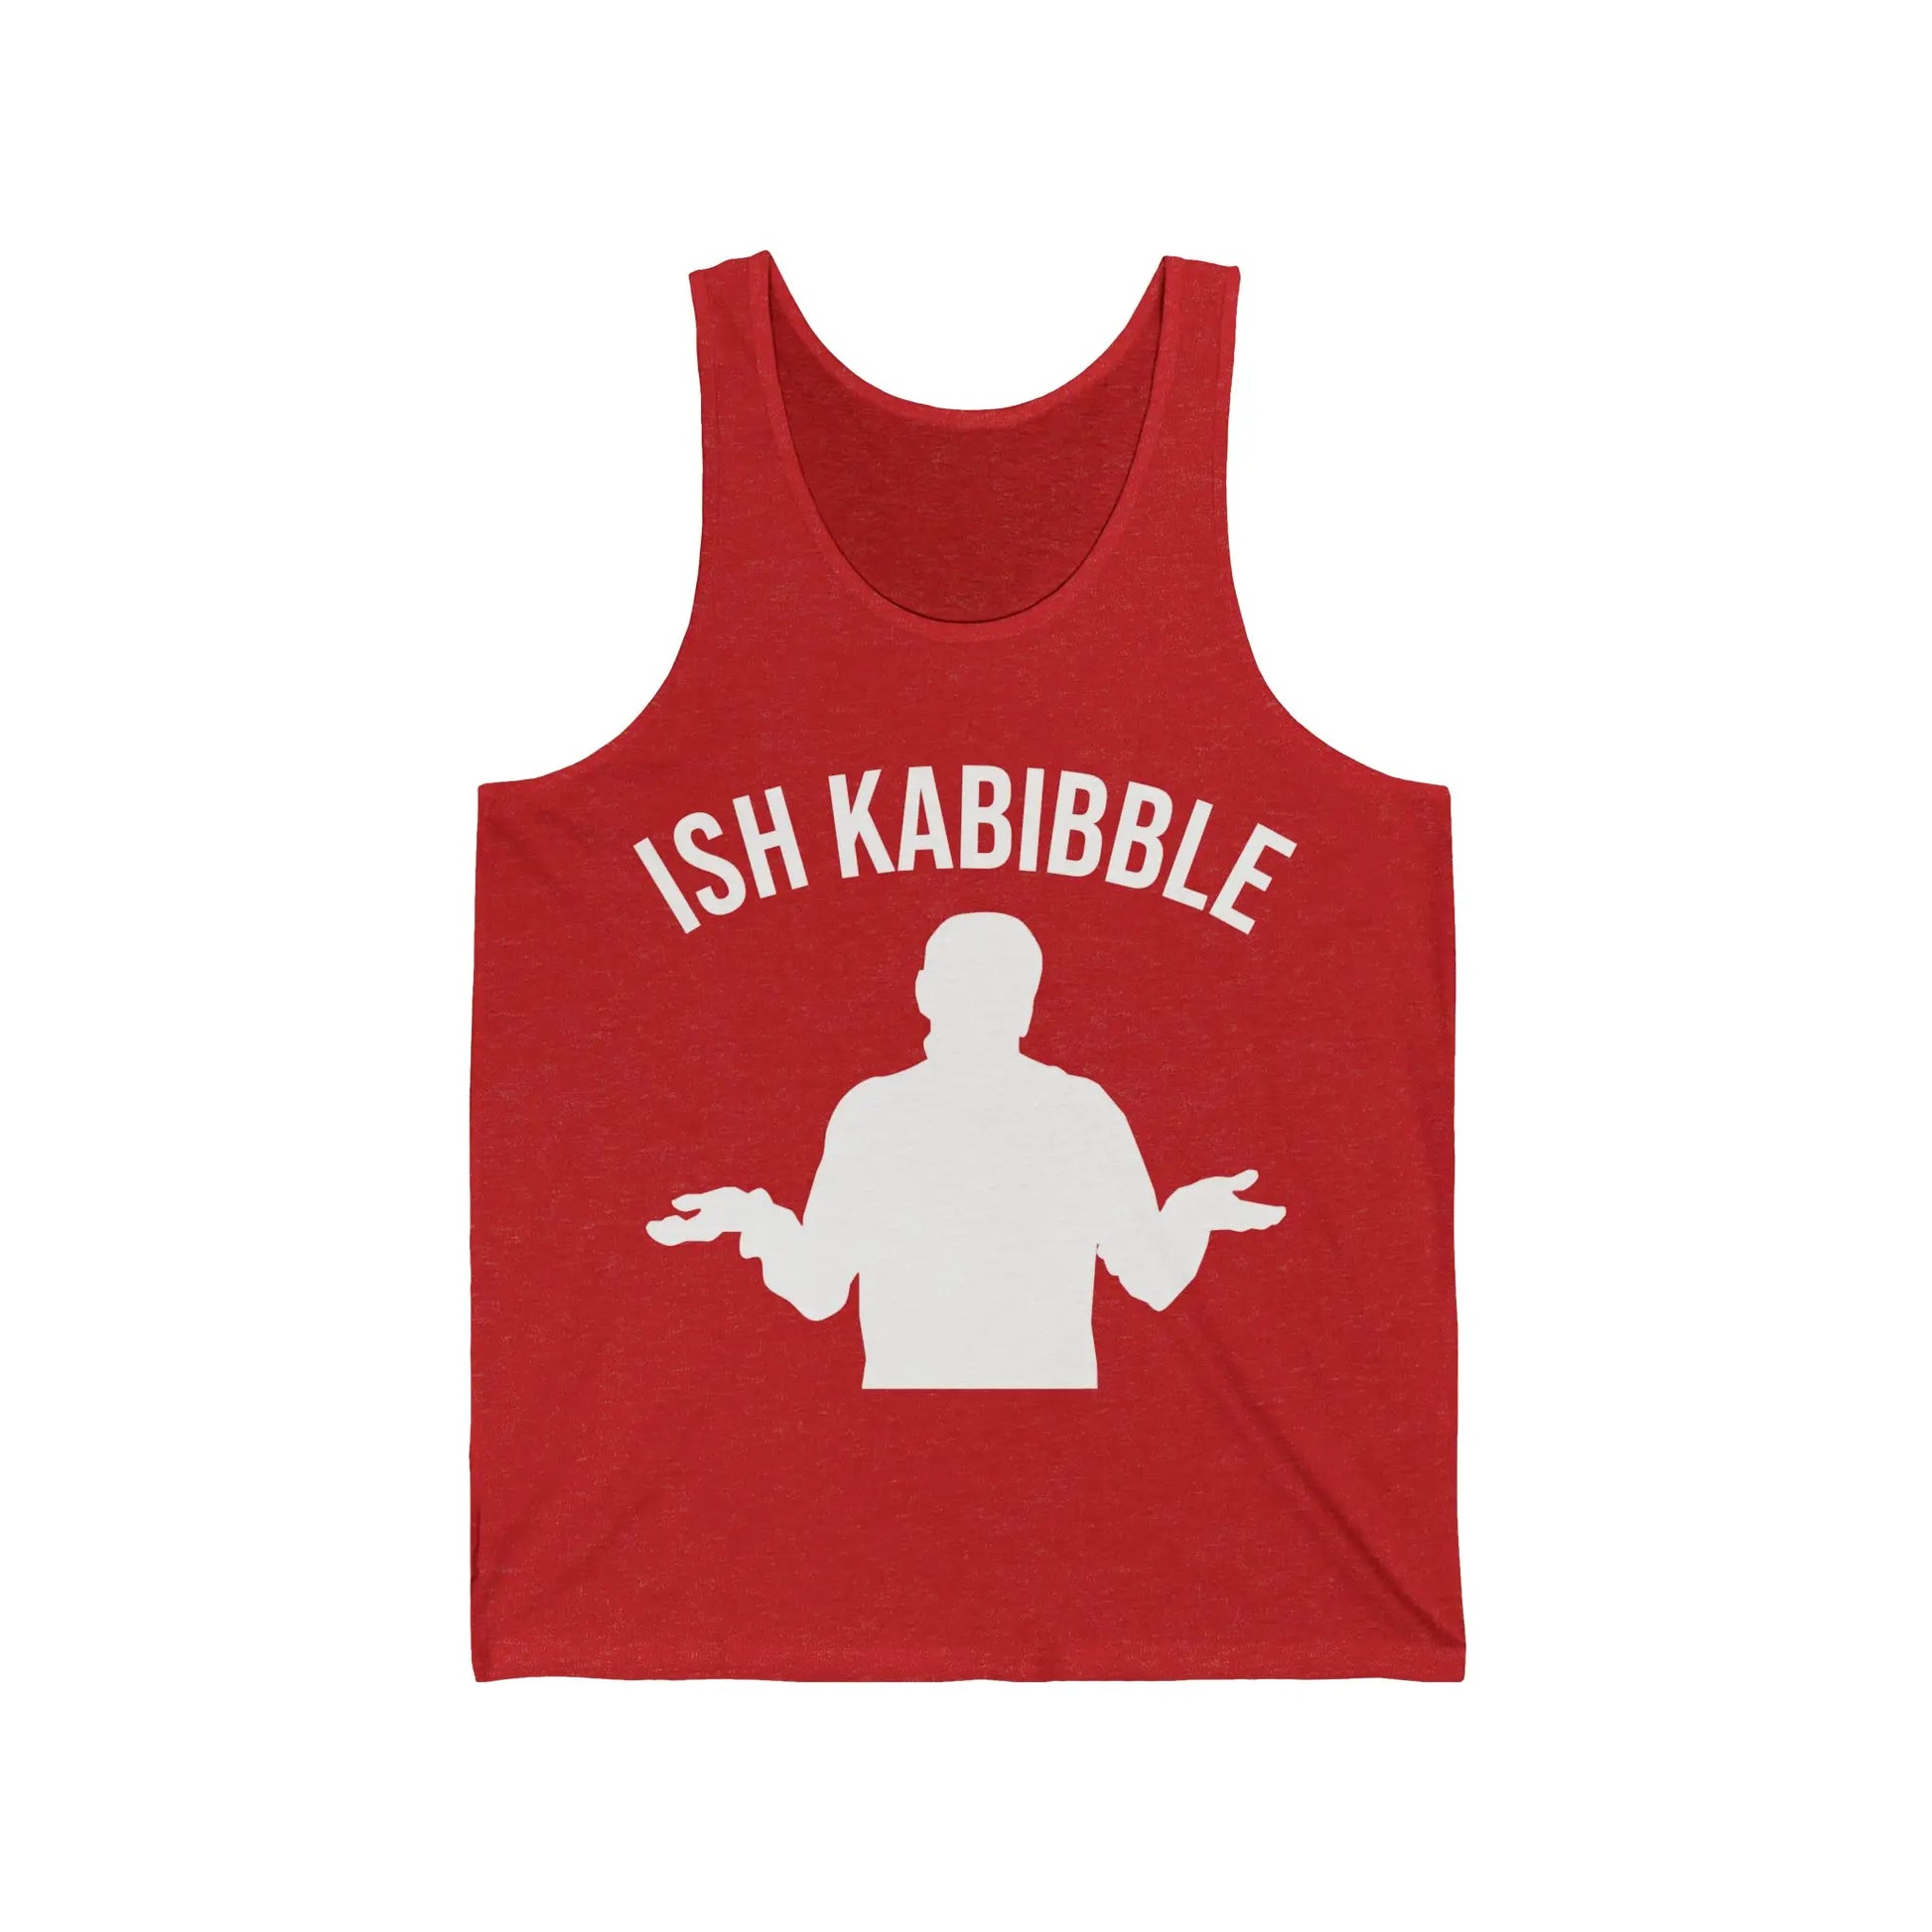 Ish Kabibble Men's Jersey Tank - Wicked Tees